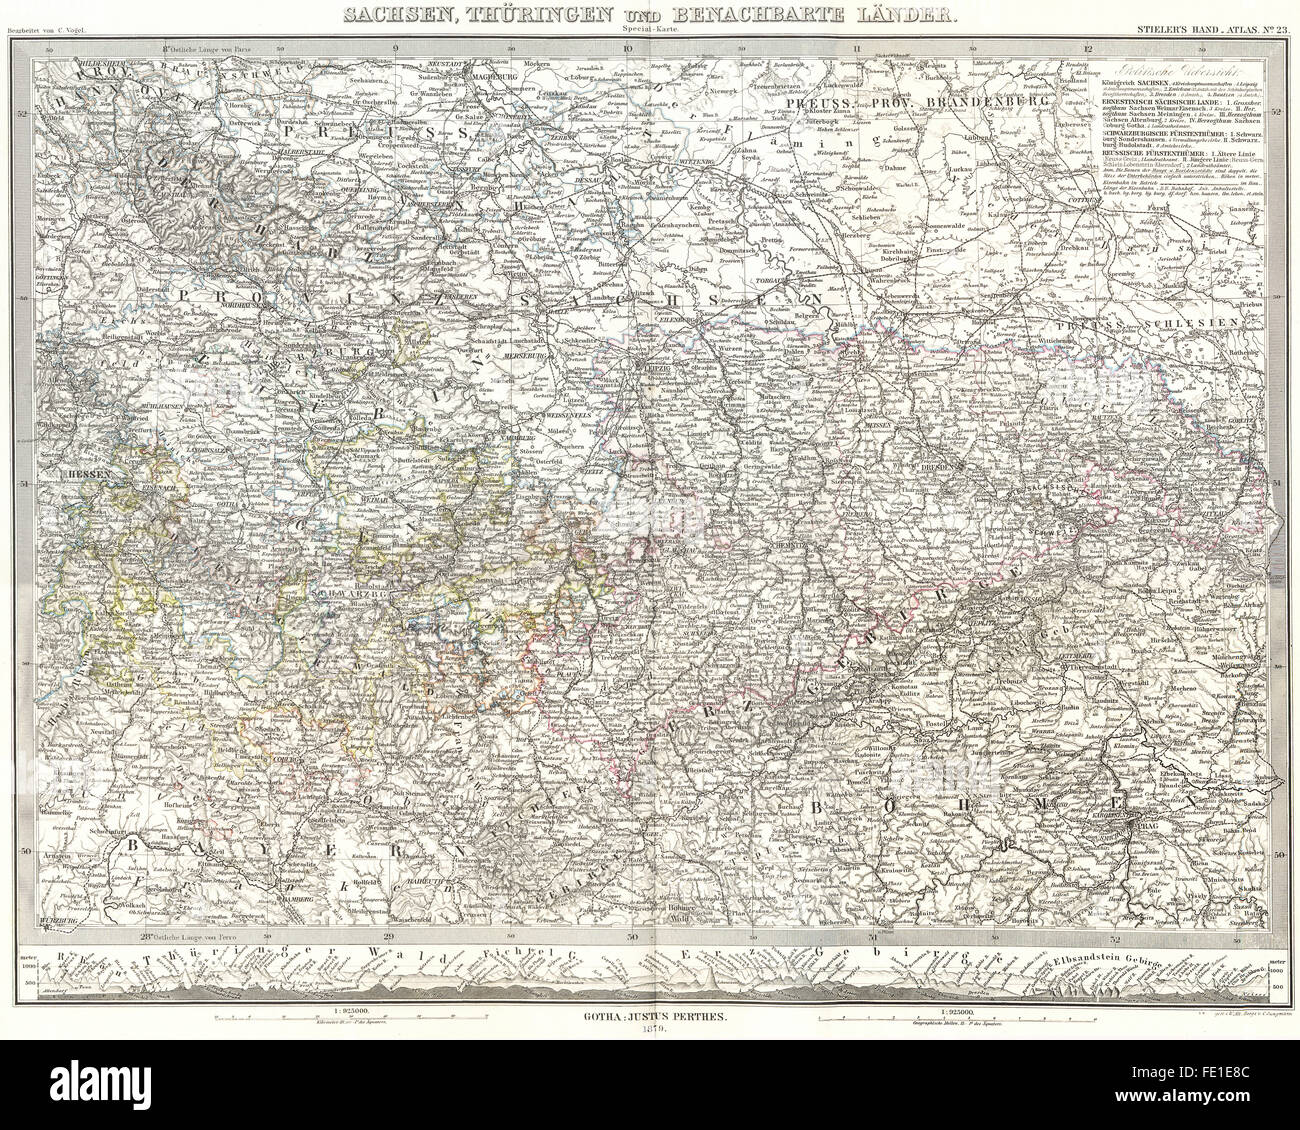 GERMANY: Sachsen, Thuringen Benachbarte Lander, 1879 antique map Stock Photo